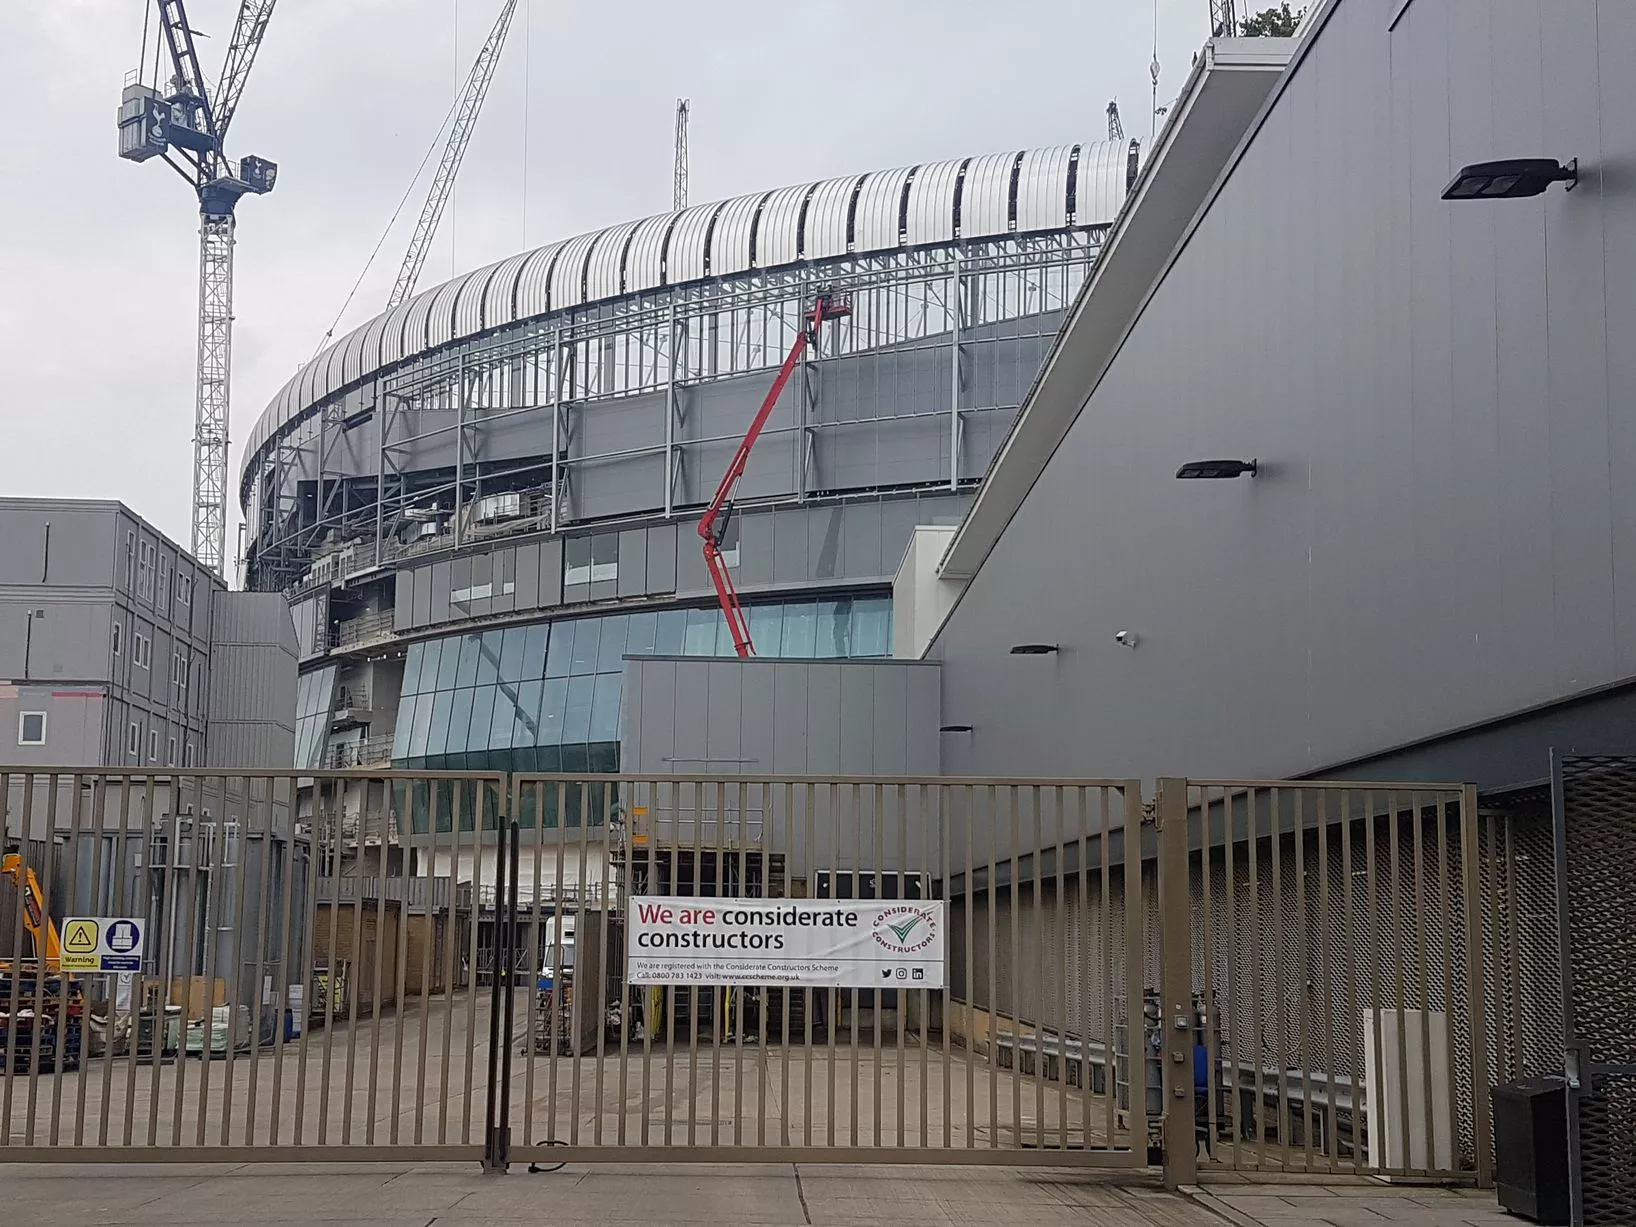 New-Spurs-stadium-245-6.jpg